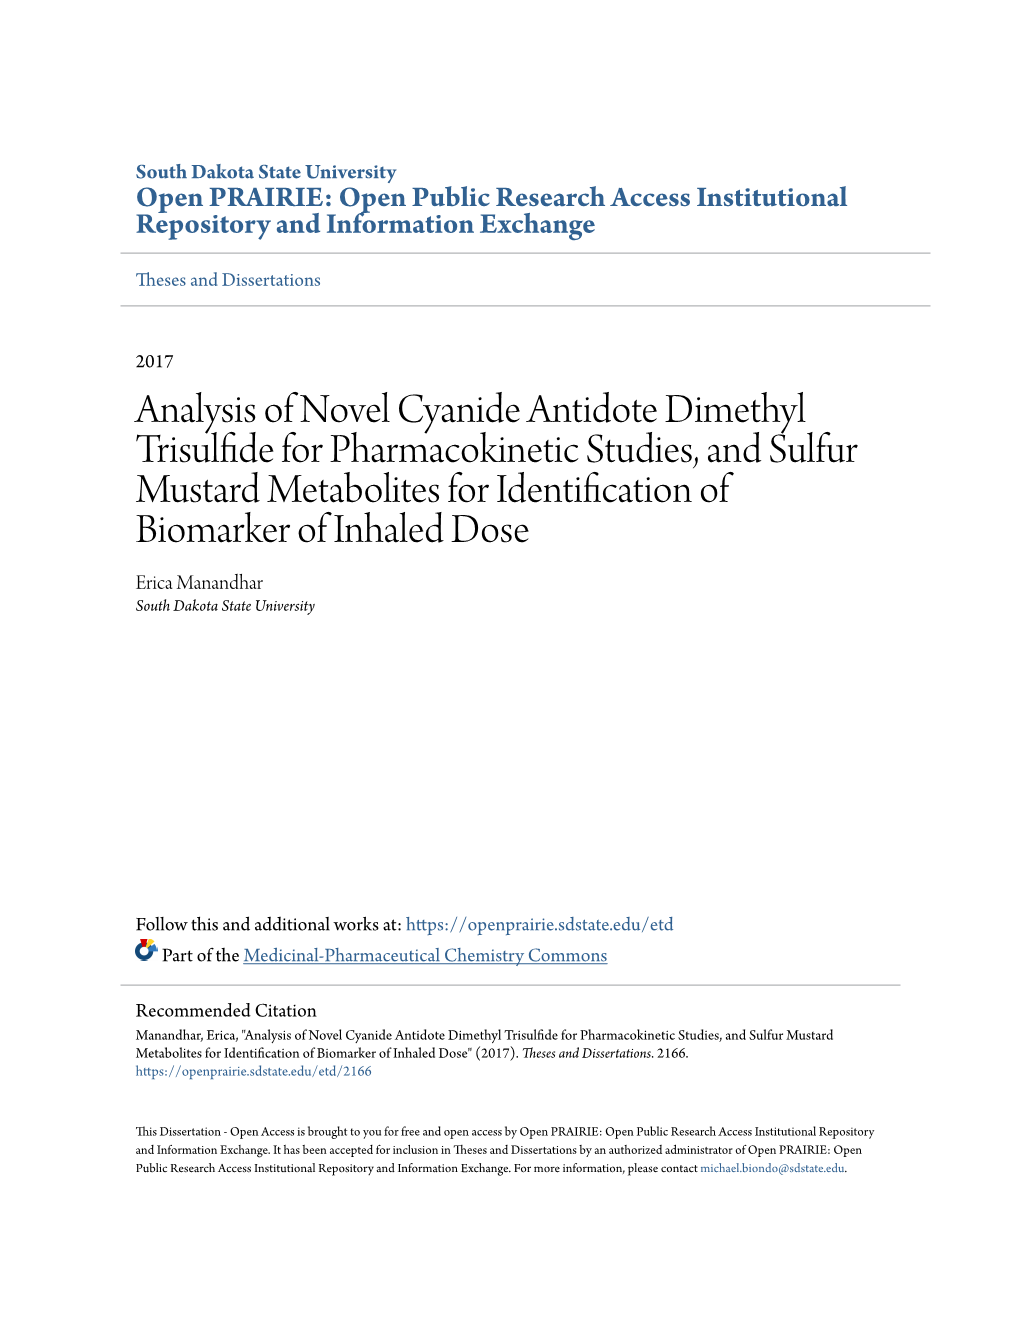 Analysis of Novel Cyanide Antidote Dimethyl Trisulfide For